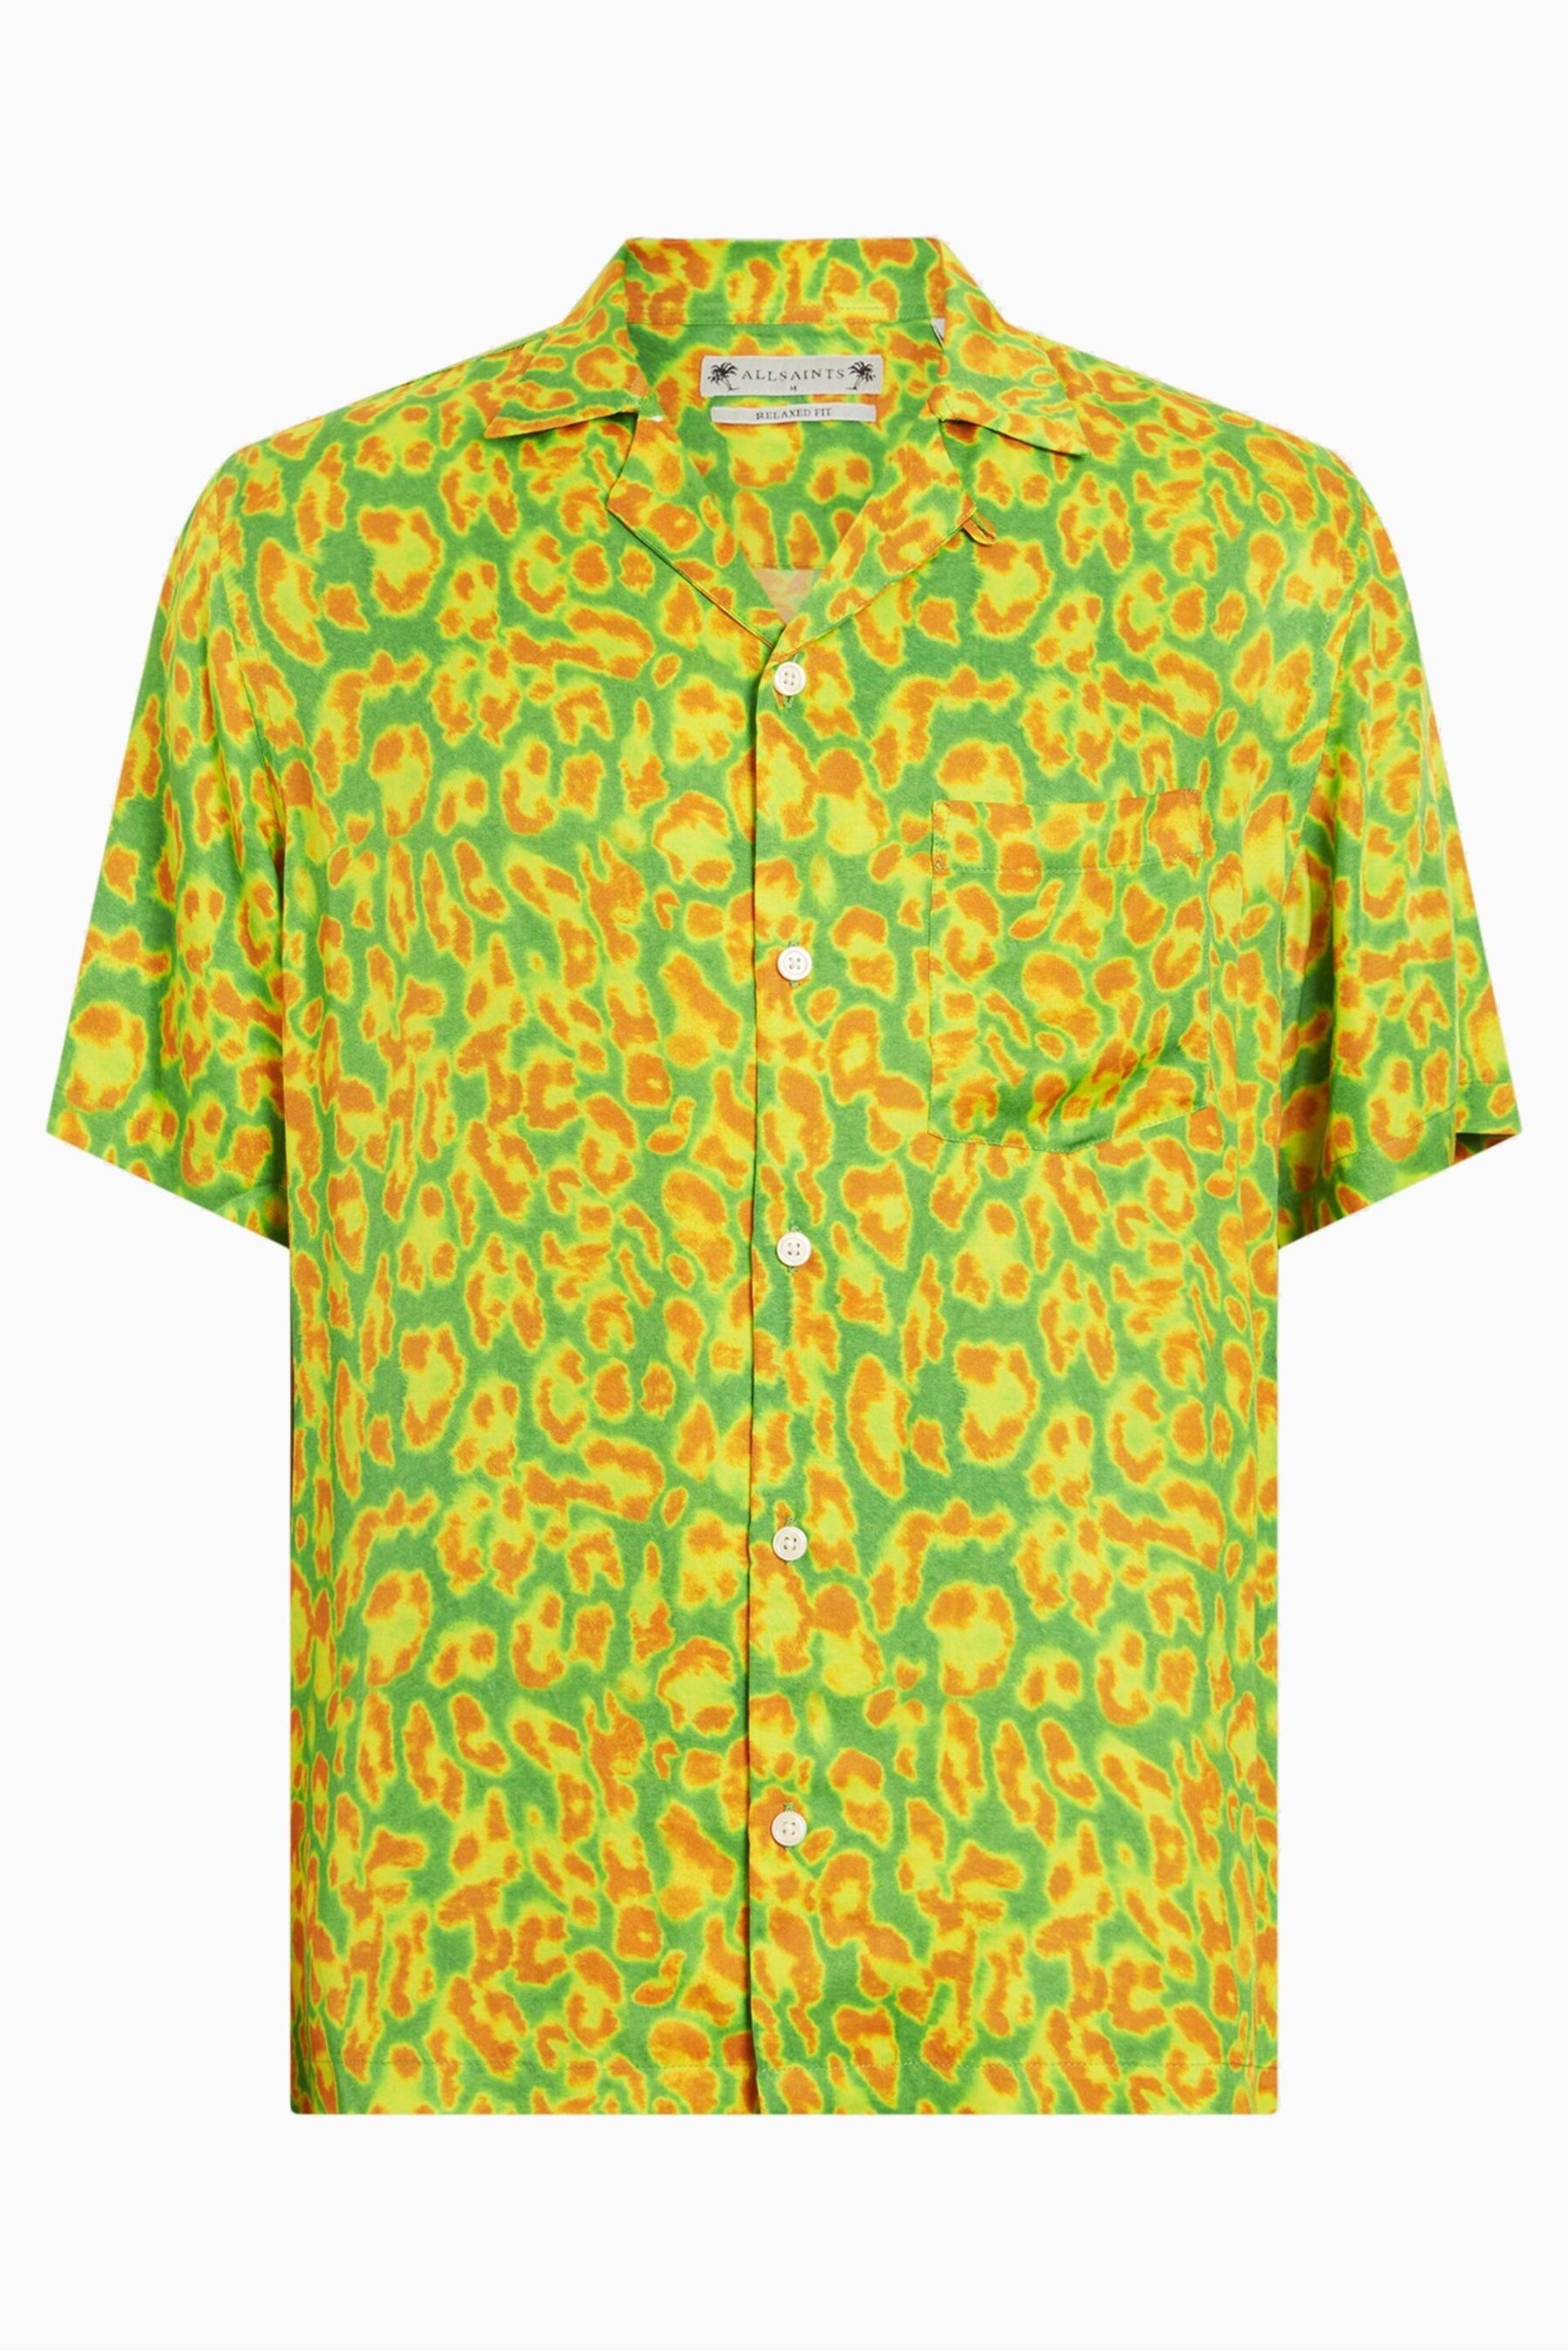 AllSaints Green Leopaz  Shirt - Image 6 of 6